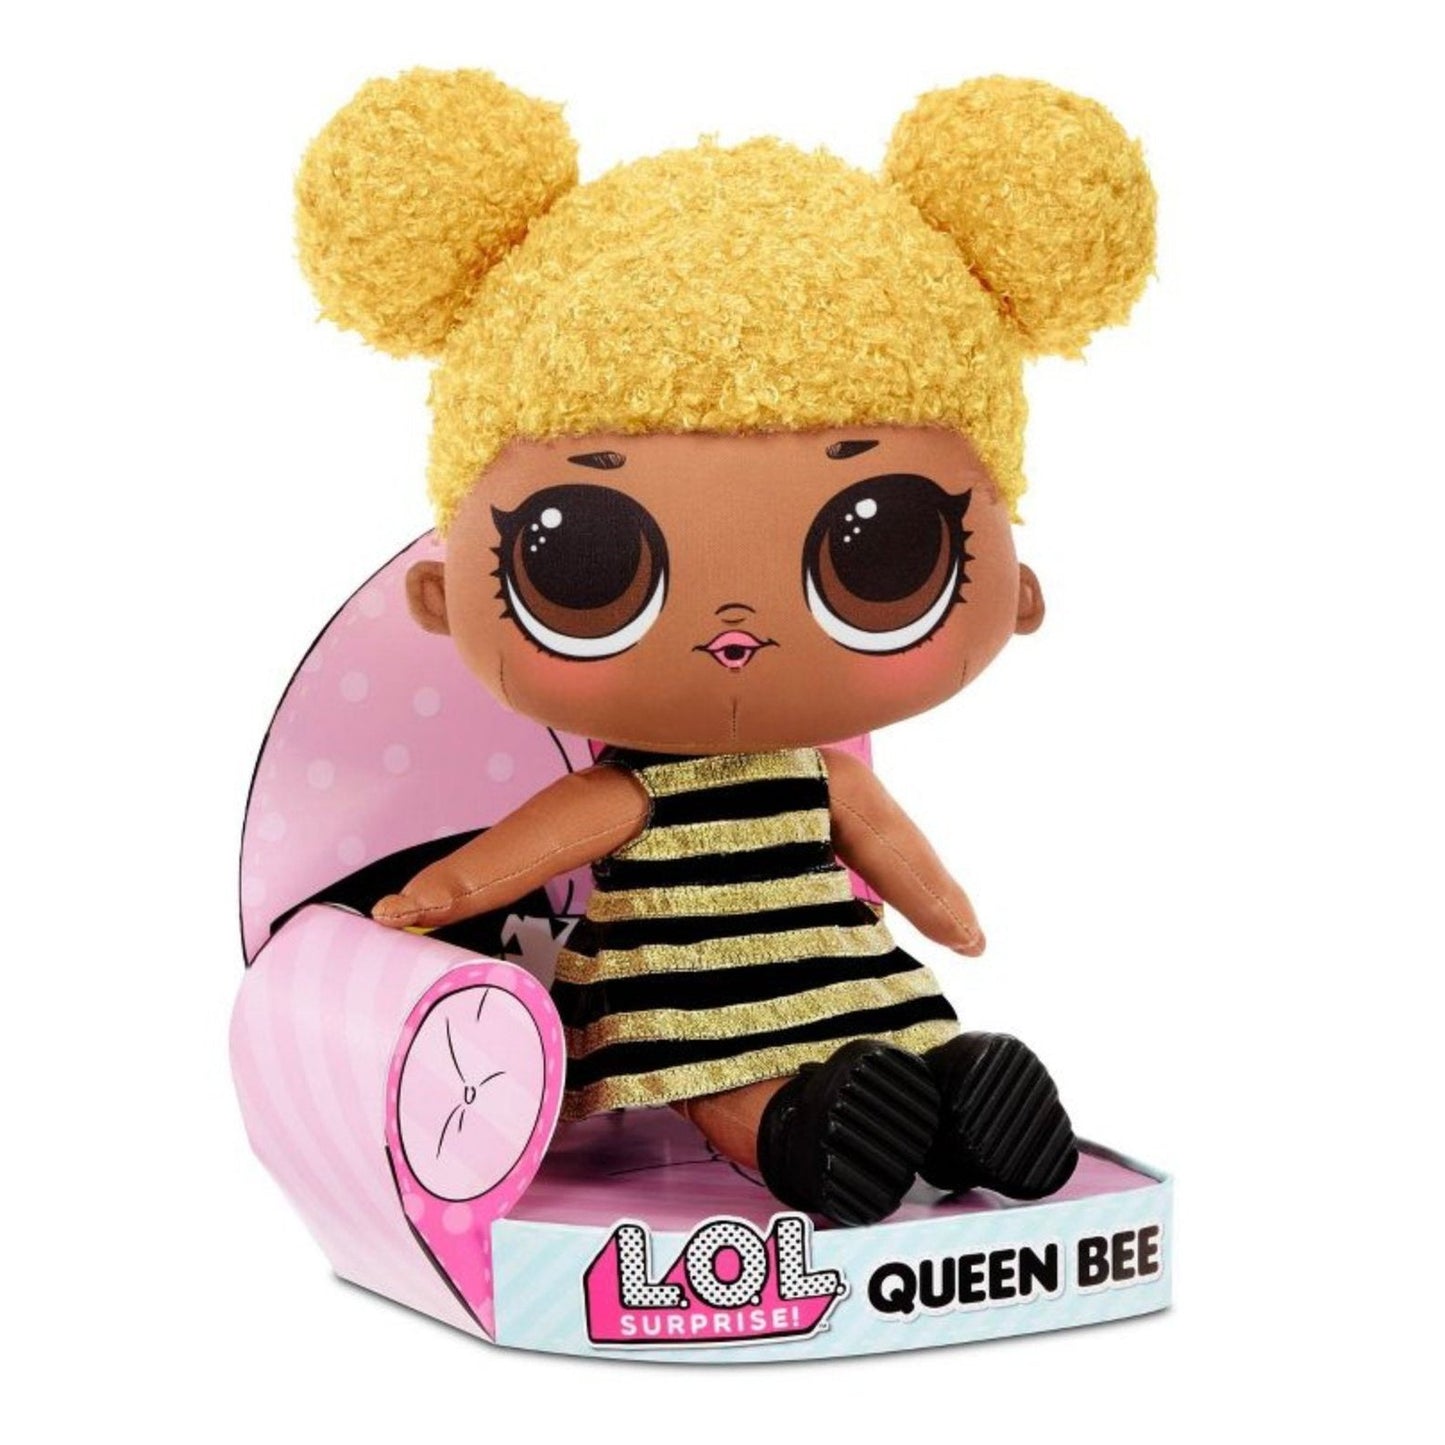 Plush L.O.L. Surprise! Queen Bee